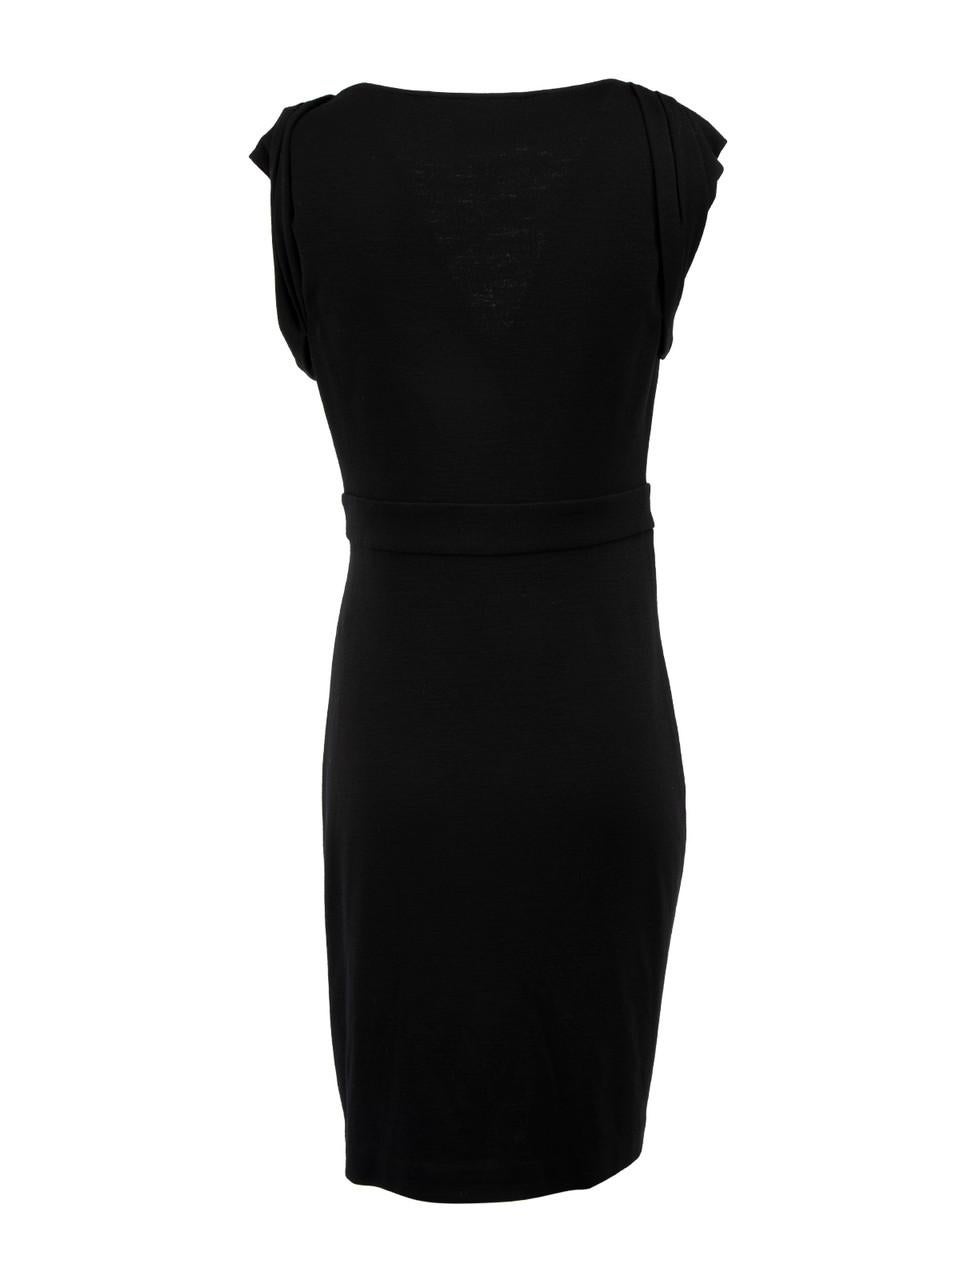 Diane von Furstenberg Black Wool Sleeveless Wrap Dress Size L In Good Condition For Sale In London, GB